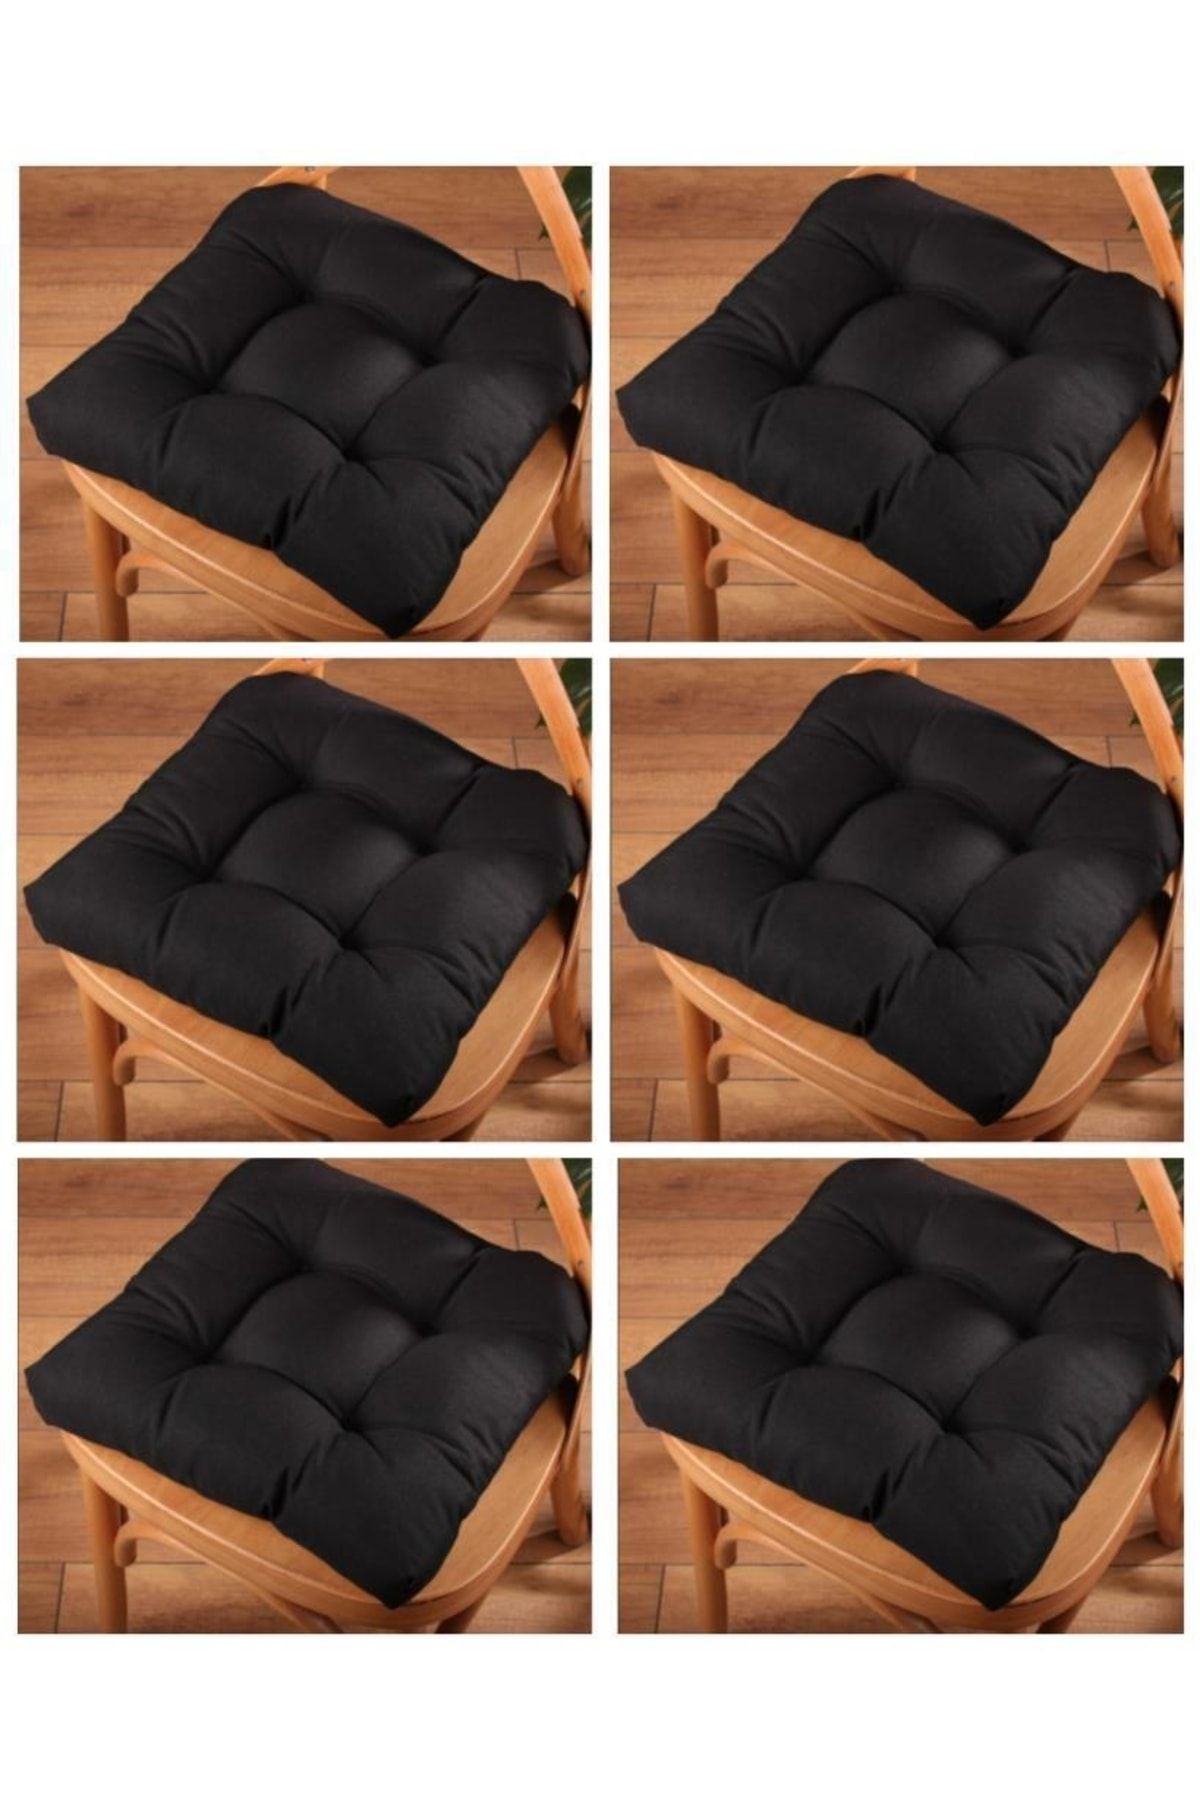 ALTINPAMUK 6'lı Gold Lüx Pofidik Sandalye Minderi Özel Dikişli 40x40cm Siyah